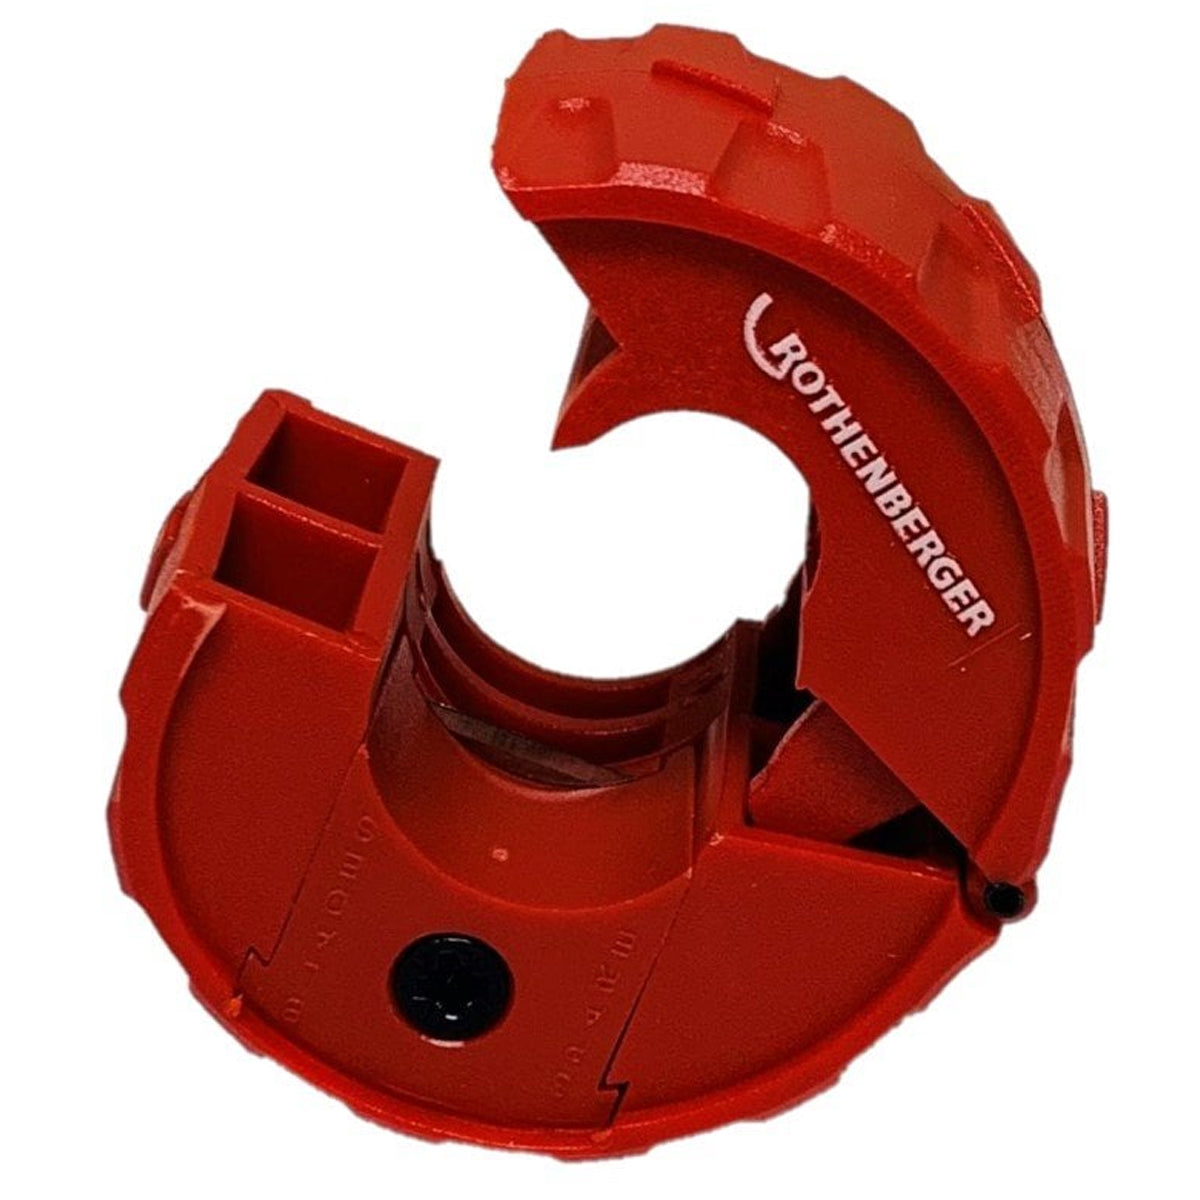 Rothenberger Plasticut Pro Pipe Cutter 15-22mm 1000003041